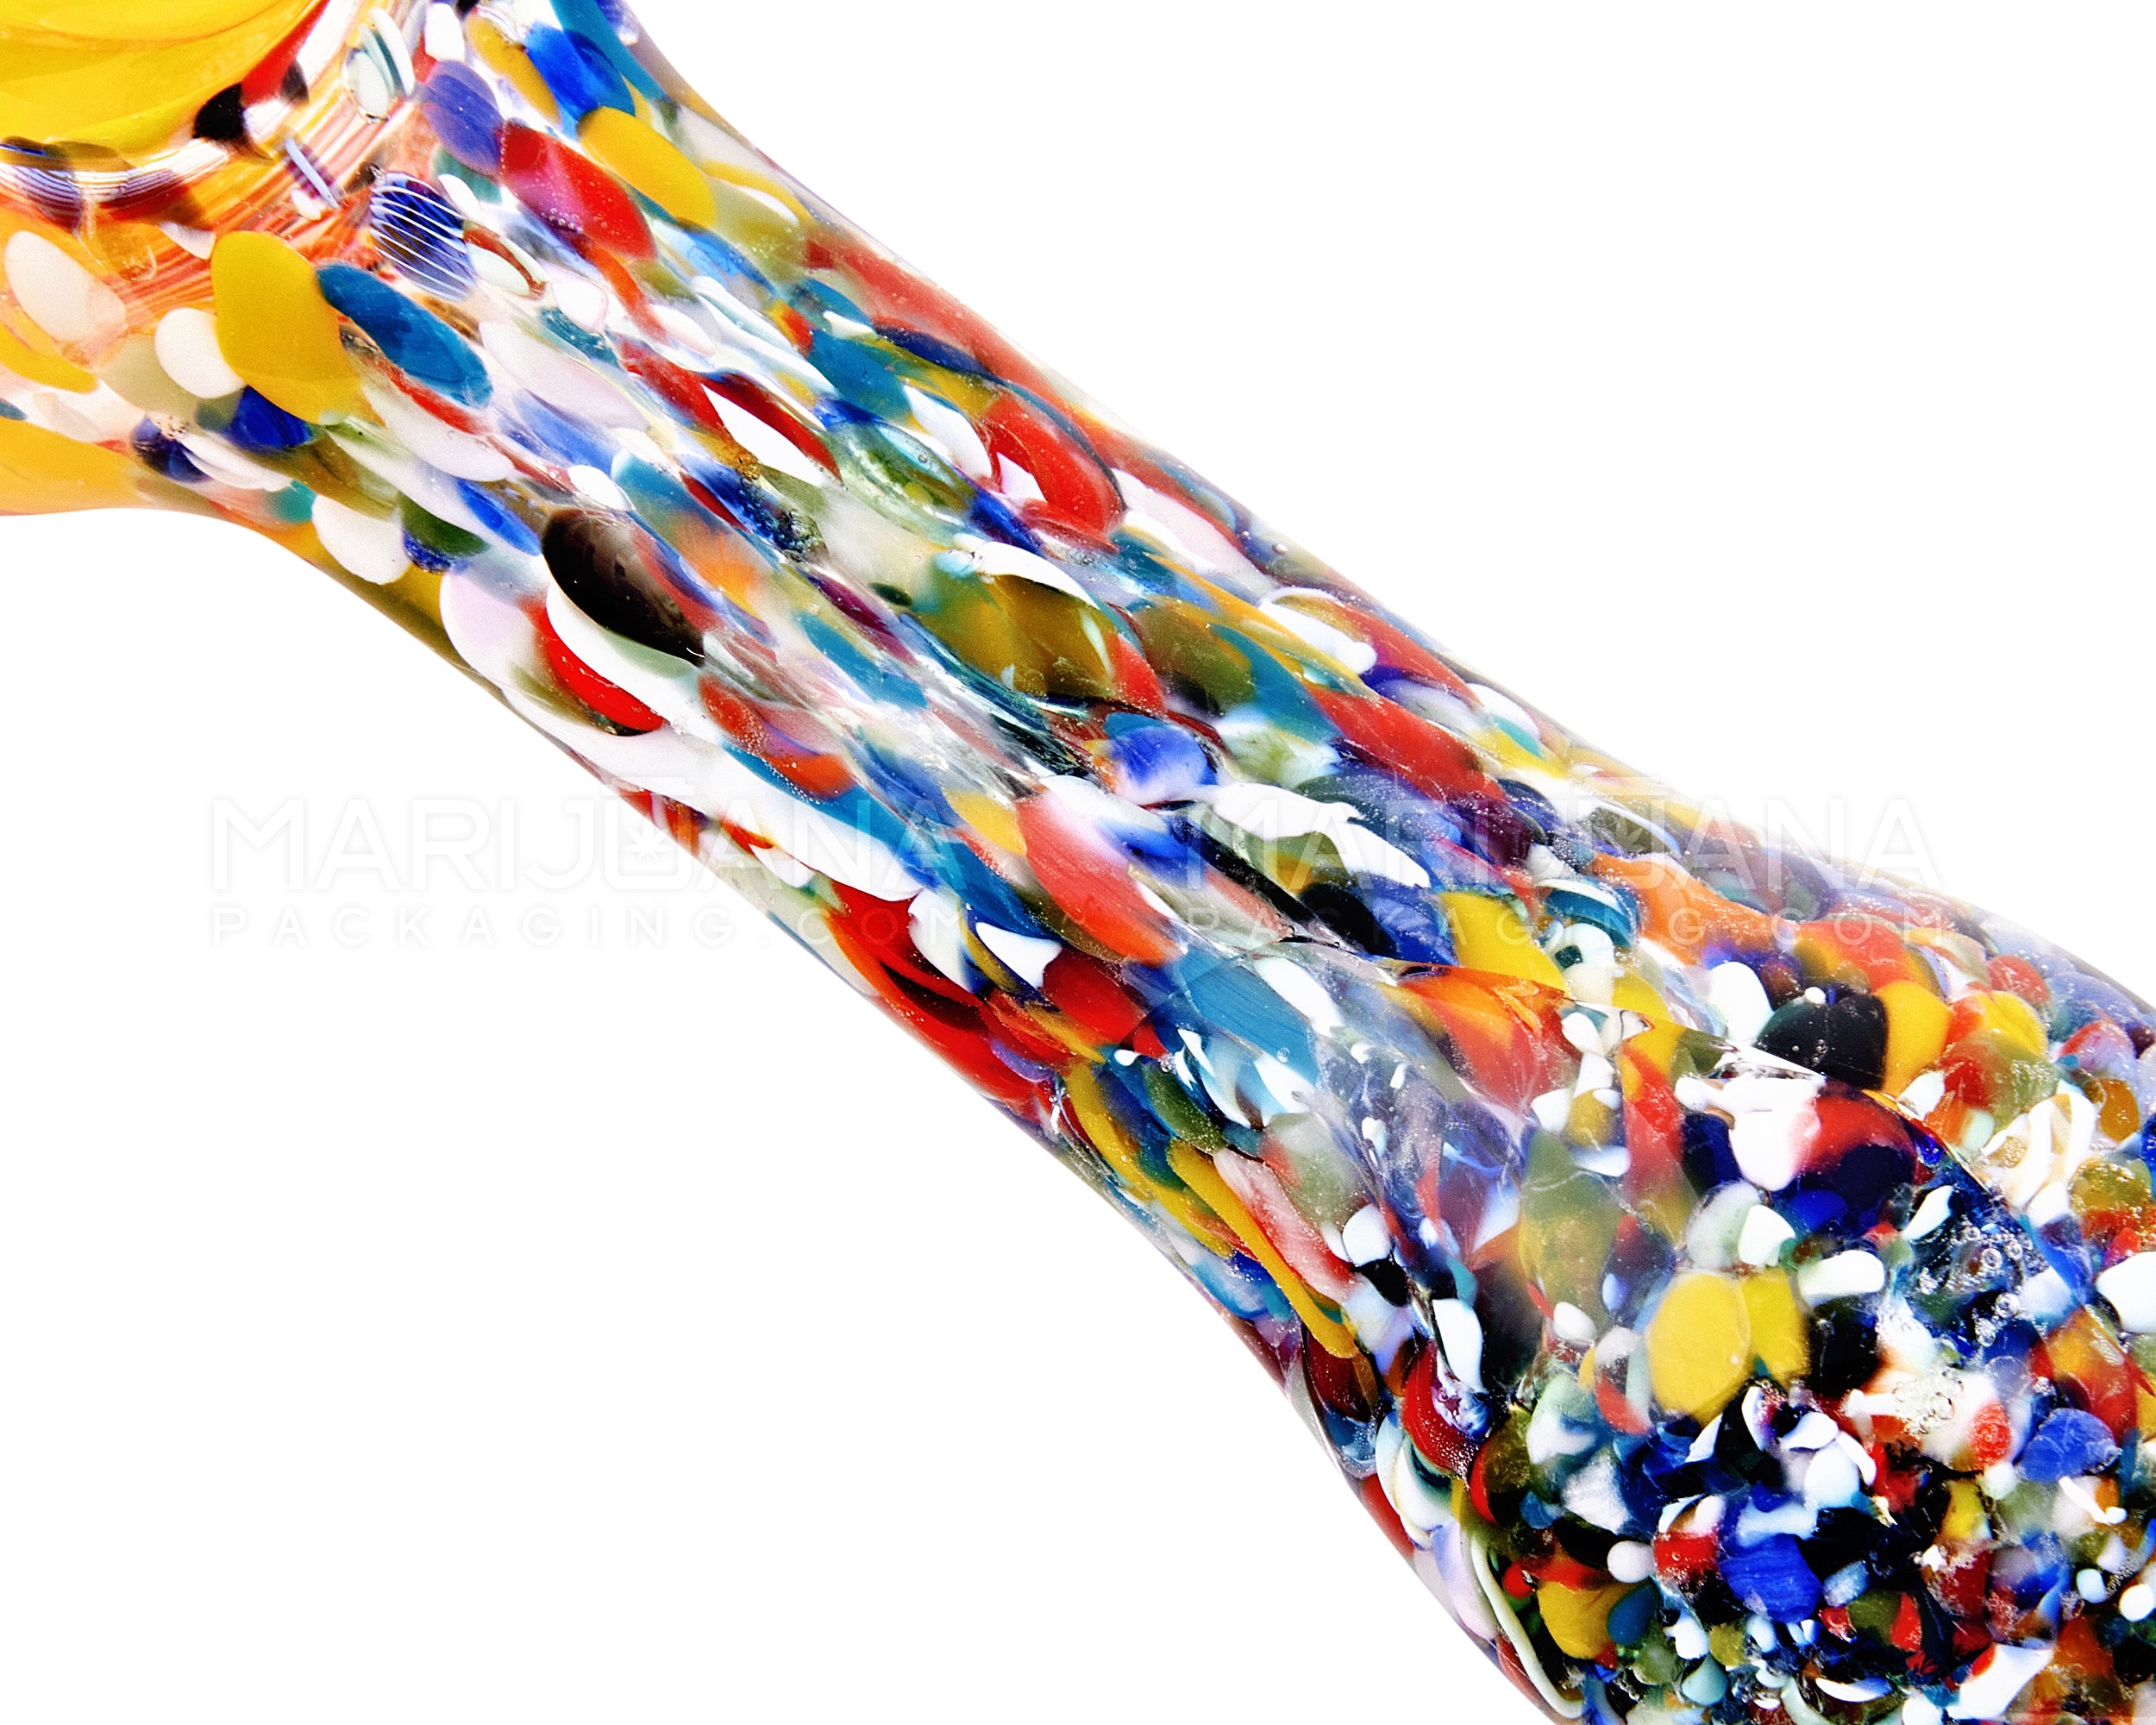 Confetti Frit & Swirl Spoon Hand Pipe w/ Triple Knockers | 4.5in Long - Glass - Assorted - 3